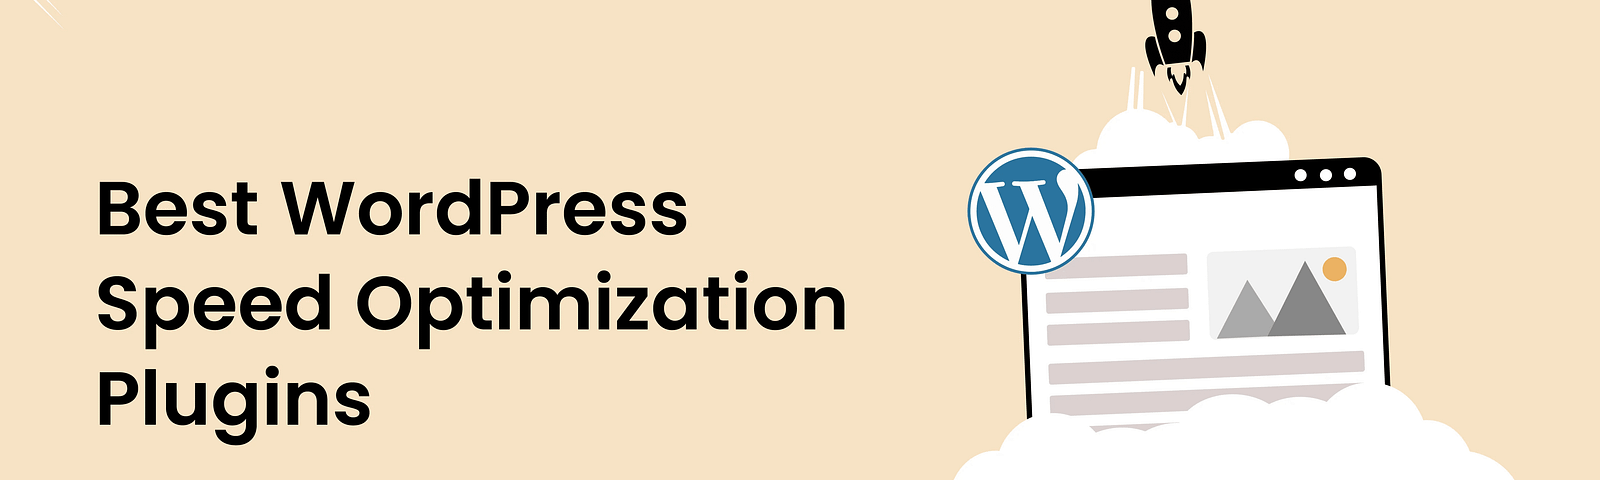 Best-WordPress-speed-optimization-plugins